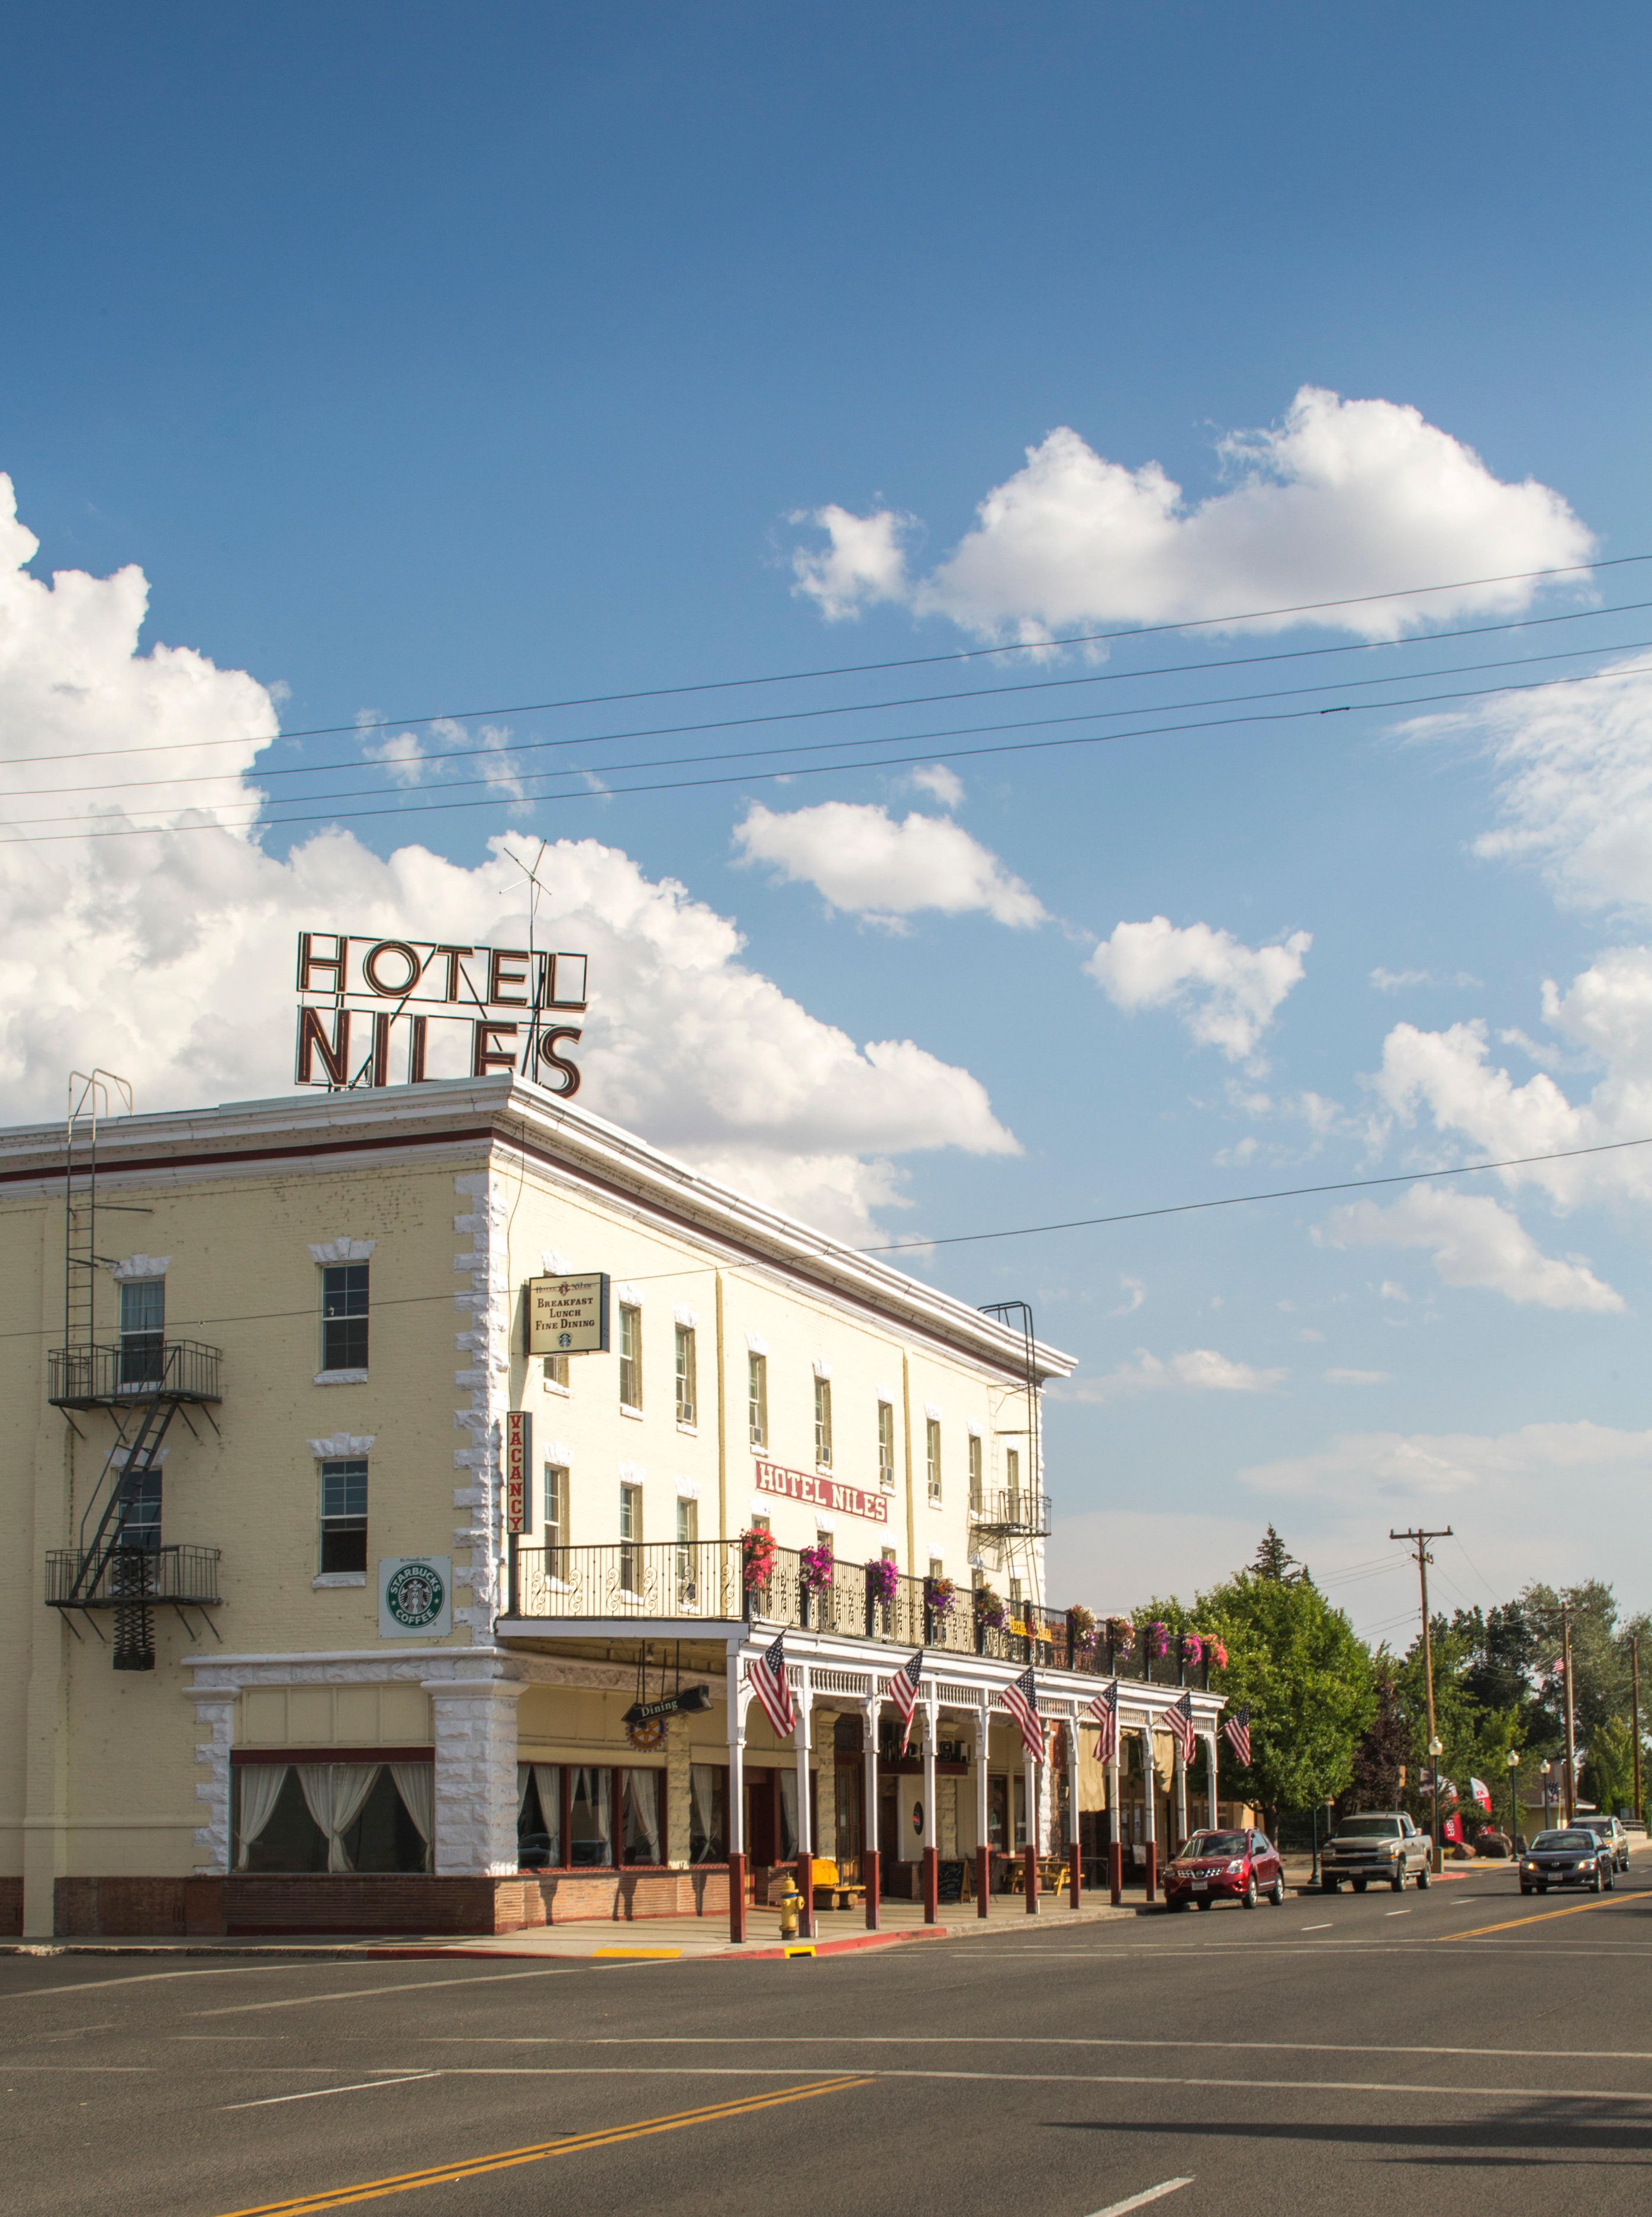 Niles Hotels